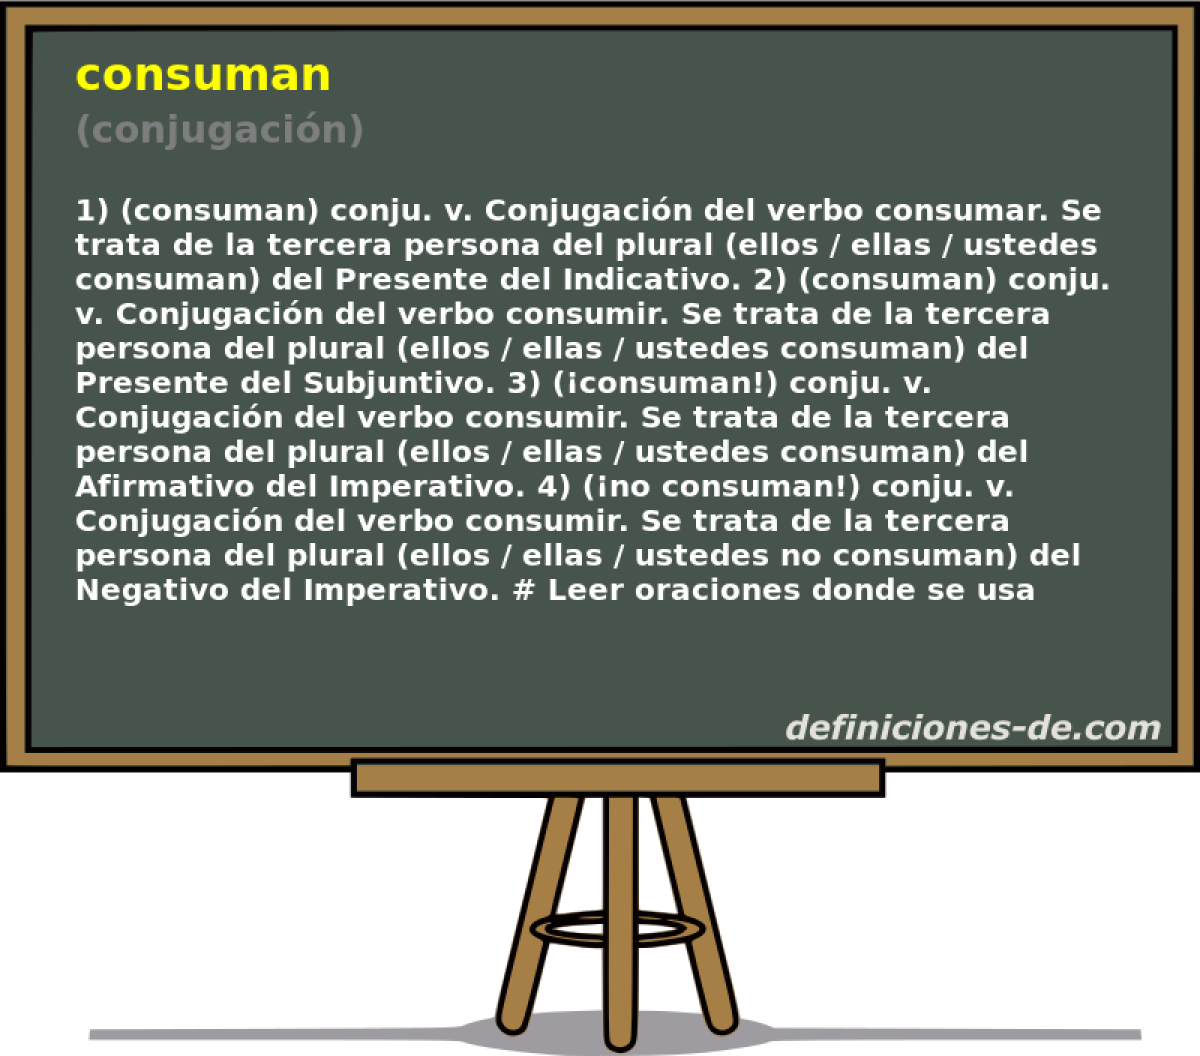 consuman (conjugacin)